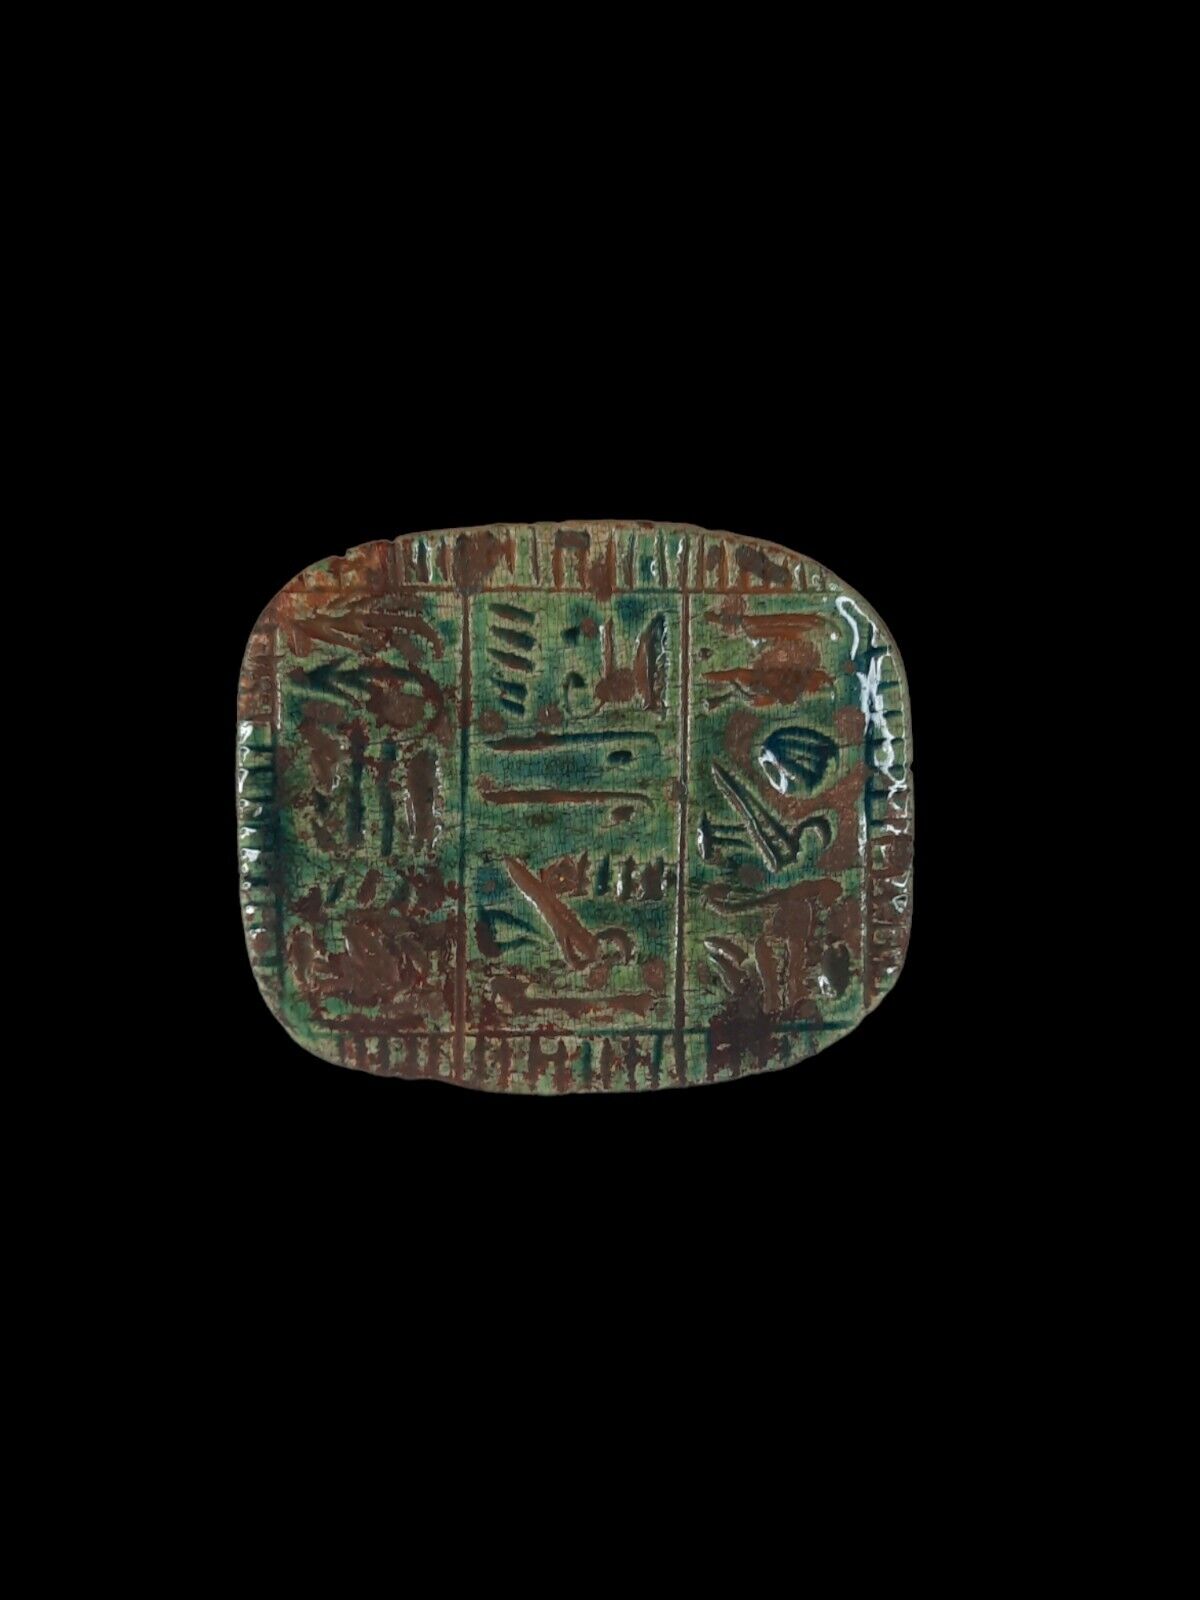 UNIQUE ANTIQUE ANCIENT EGYPTIAN Ring Good Luck Happy Life Magic Hieroglyphic